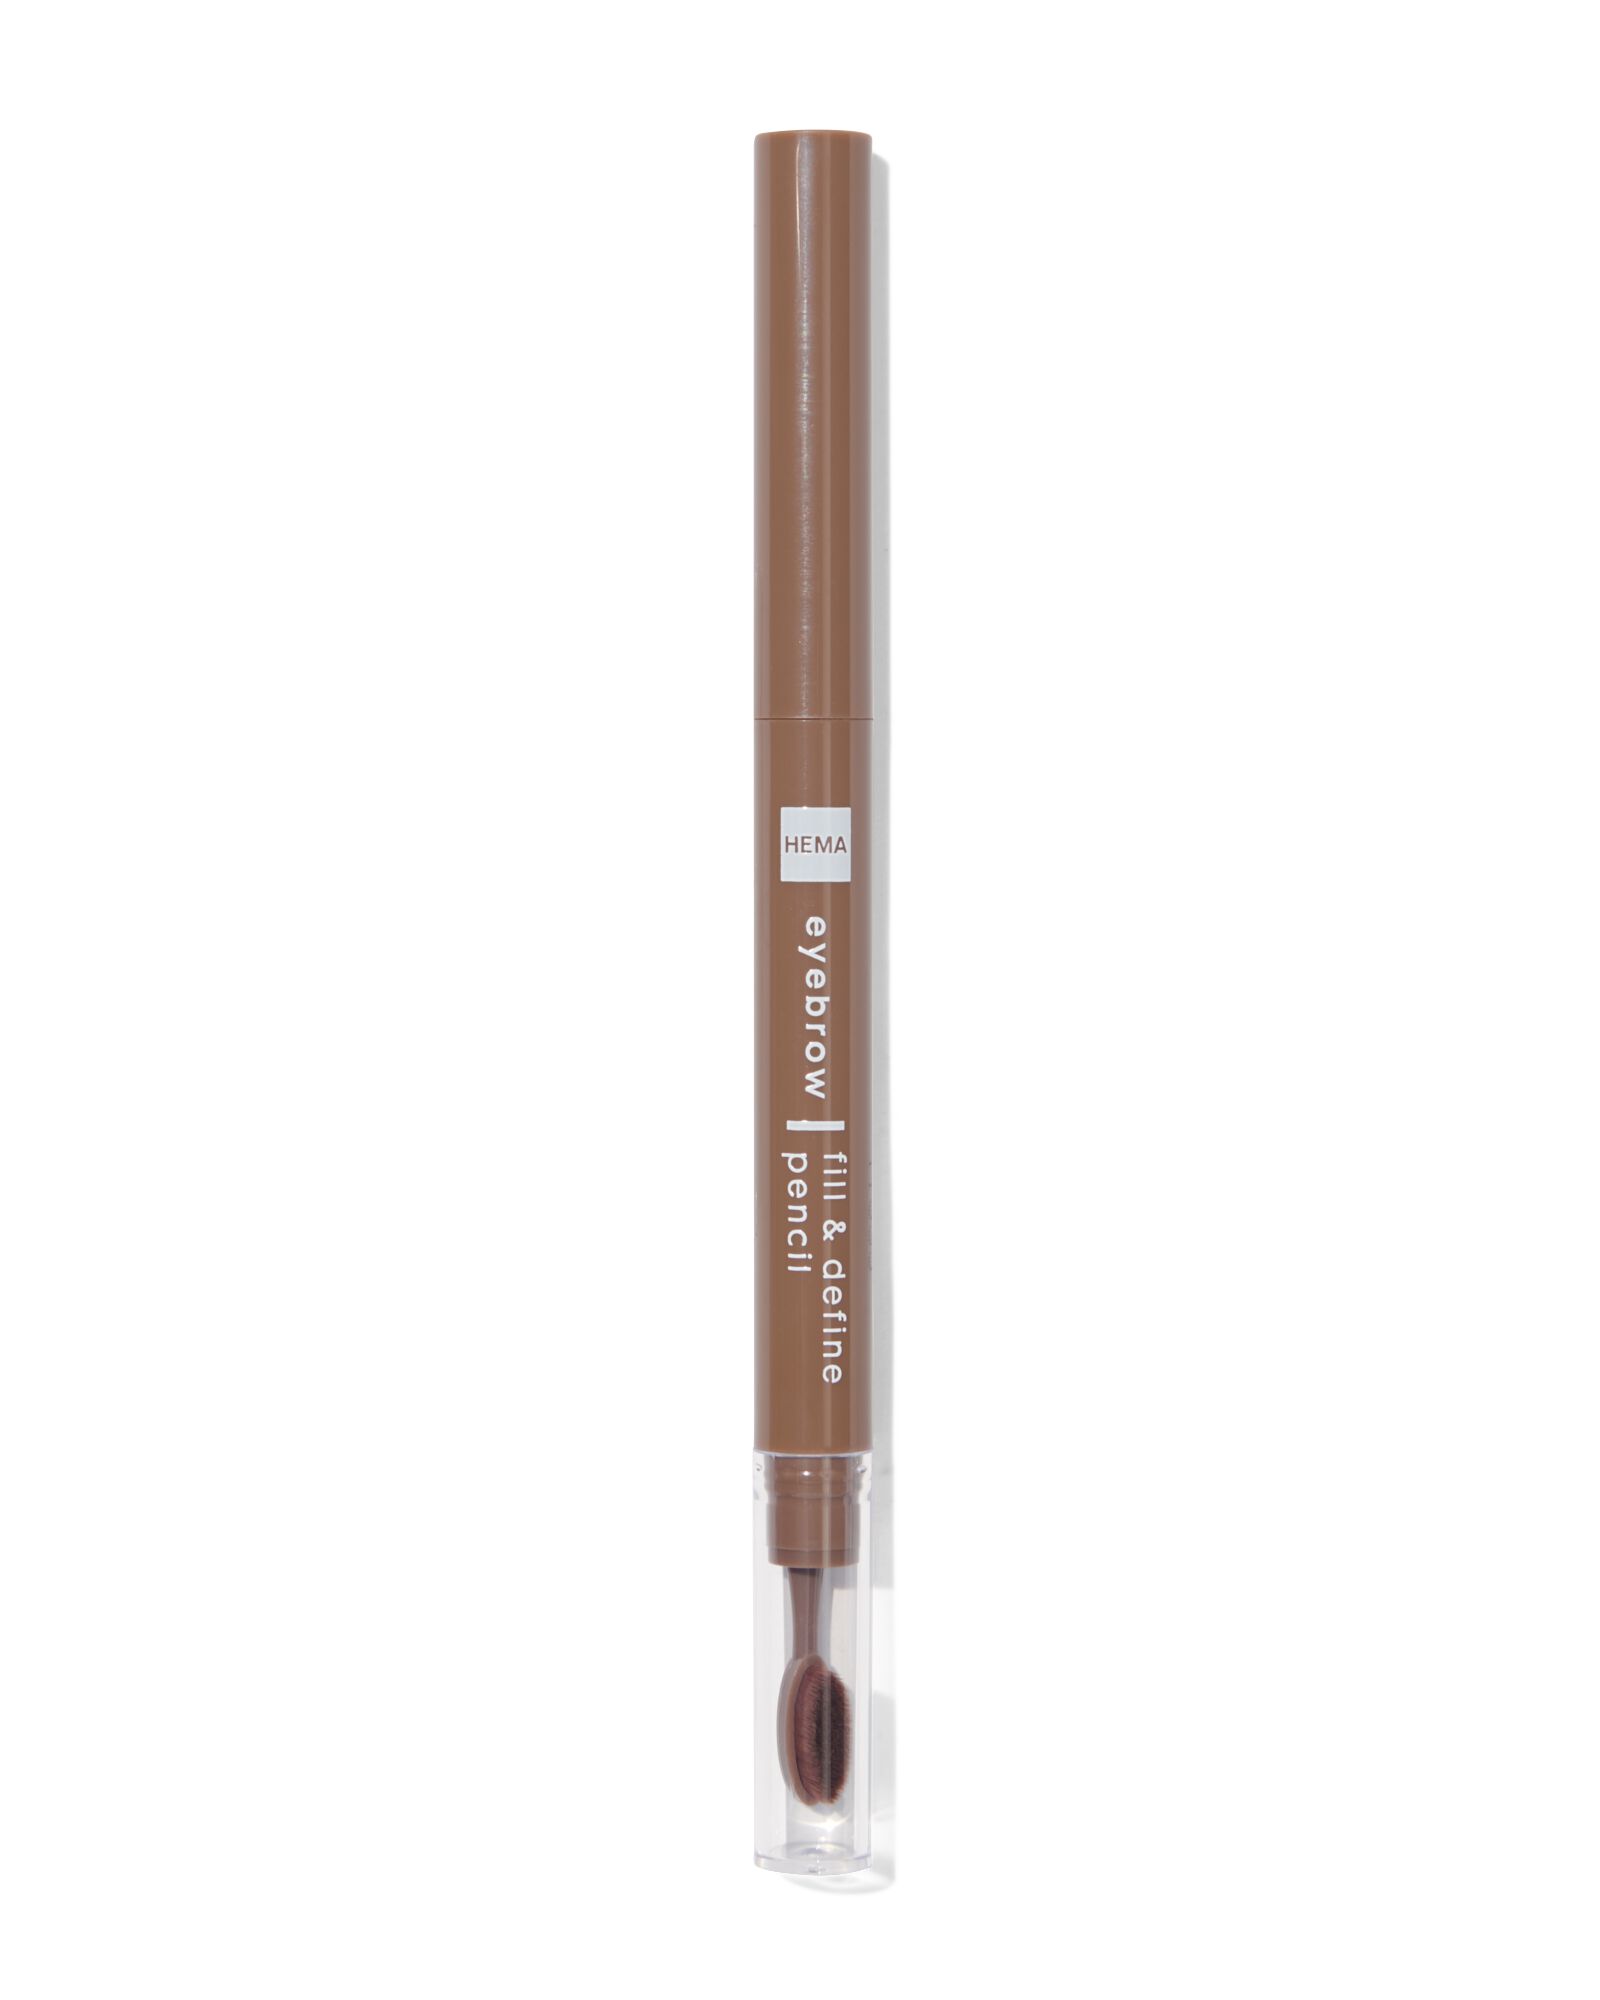 HEMA Eyebrow Fill & Define Pencil 02 Ash